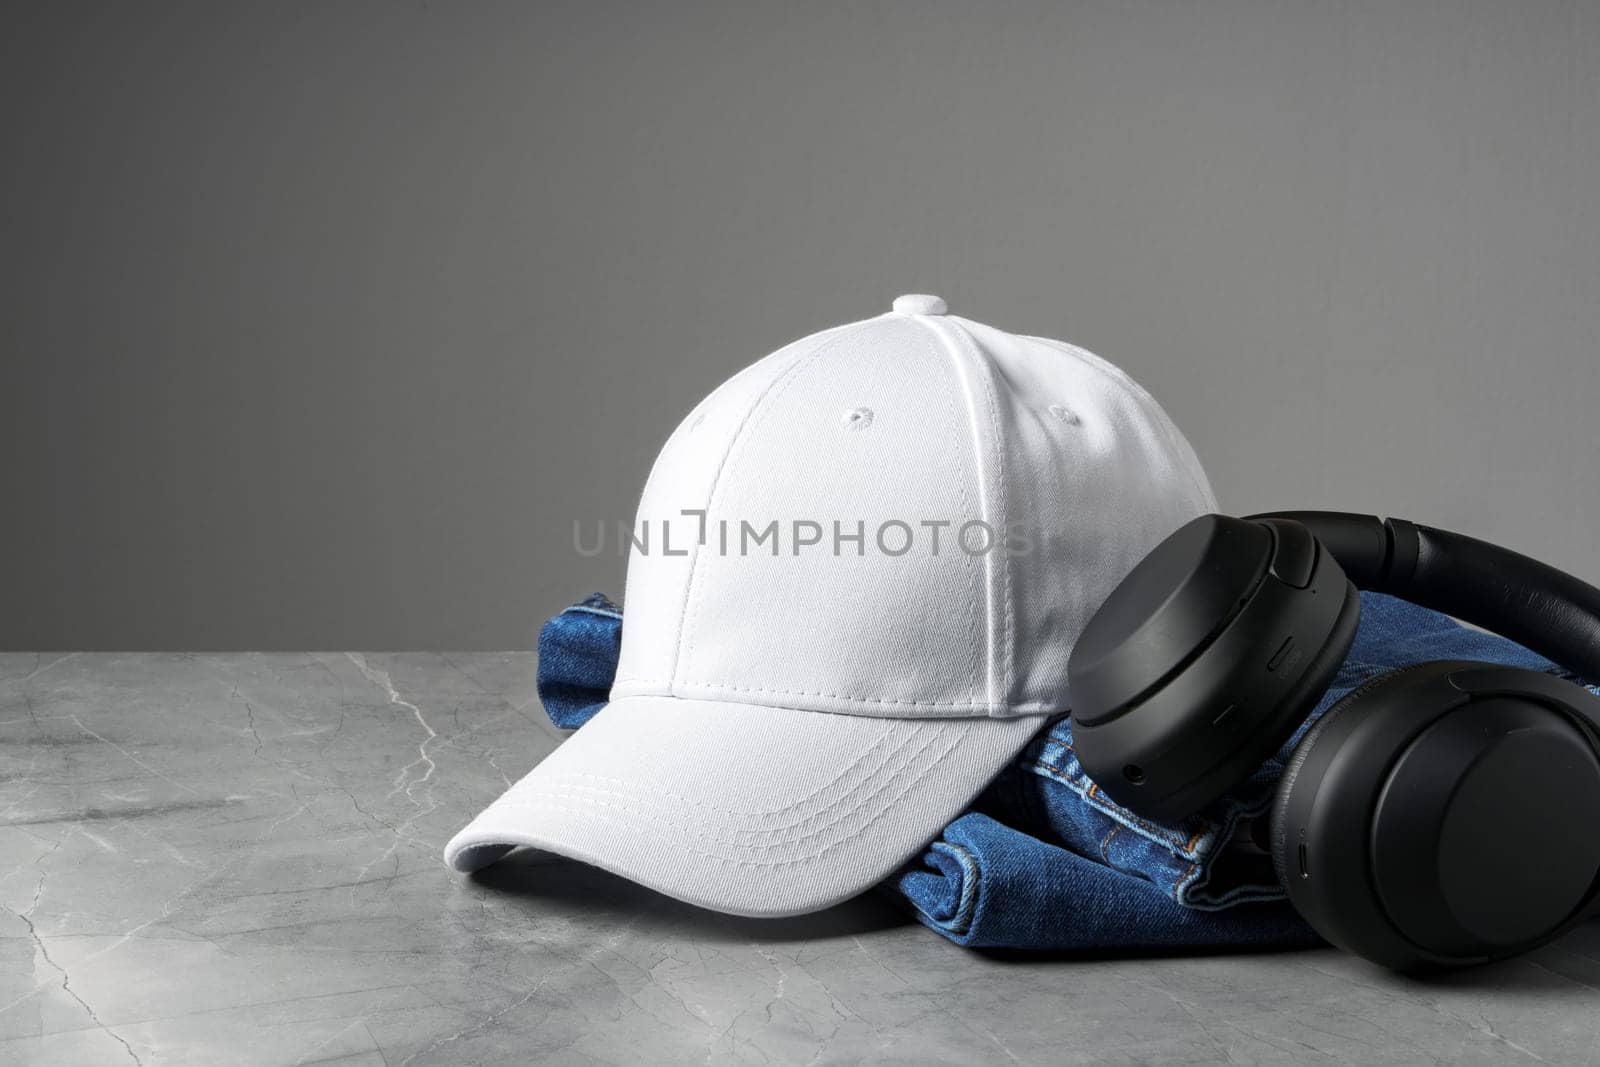 Baseball cap with black headphones on dark background studio shot